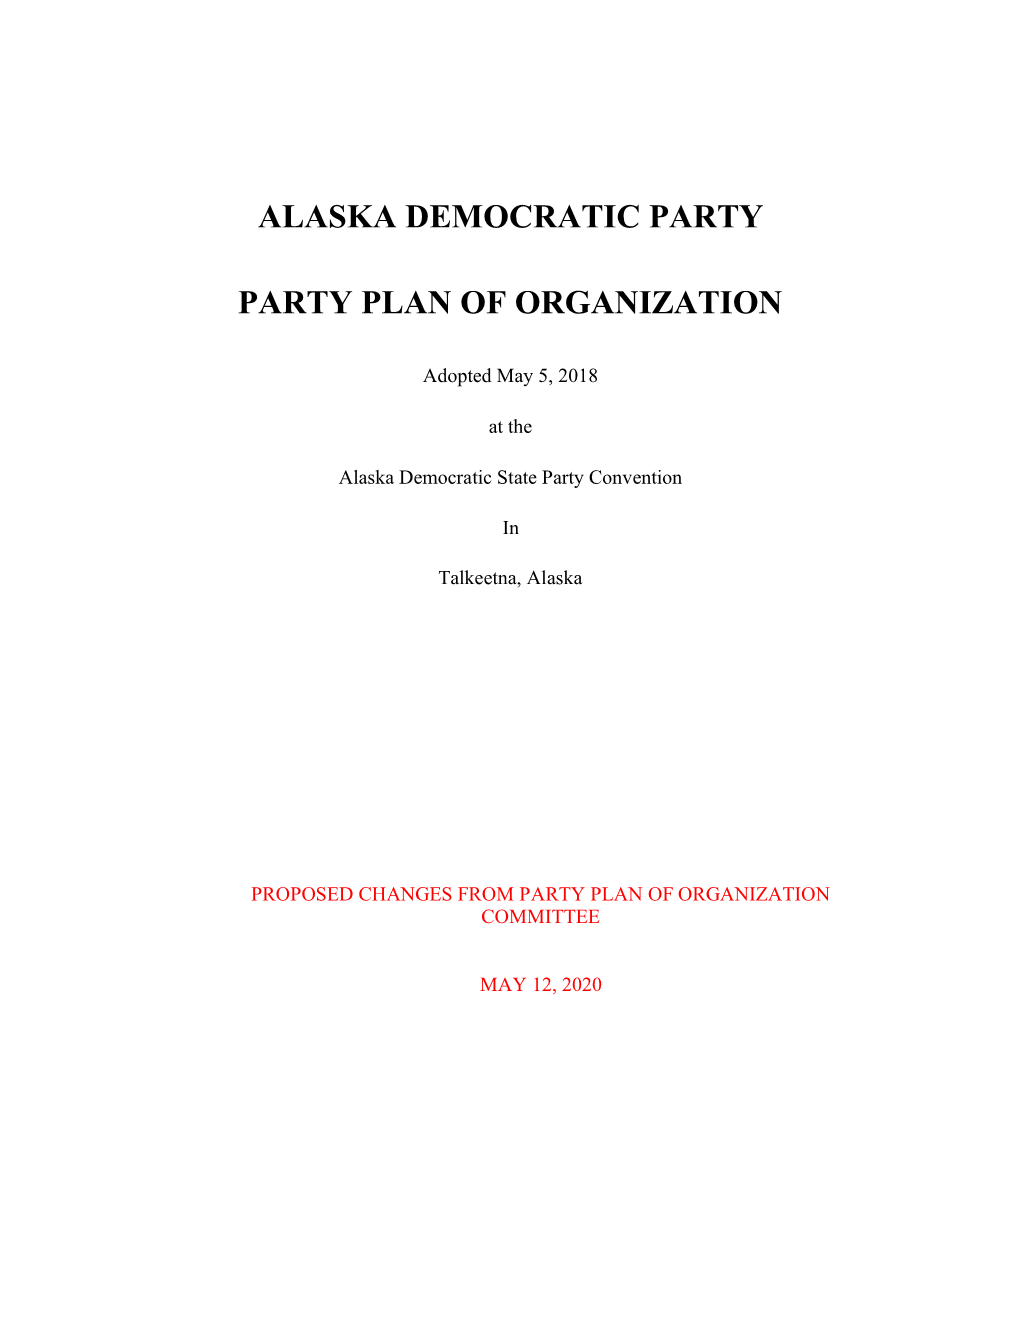 Alaska Democratic Party Party Plan of Organization